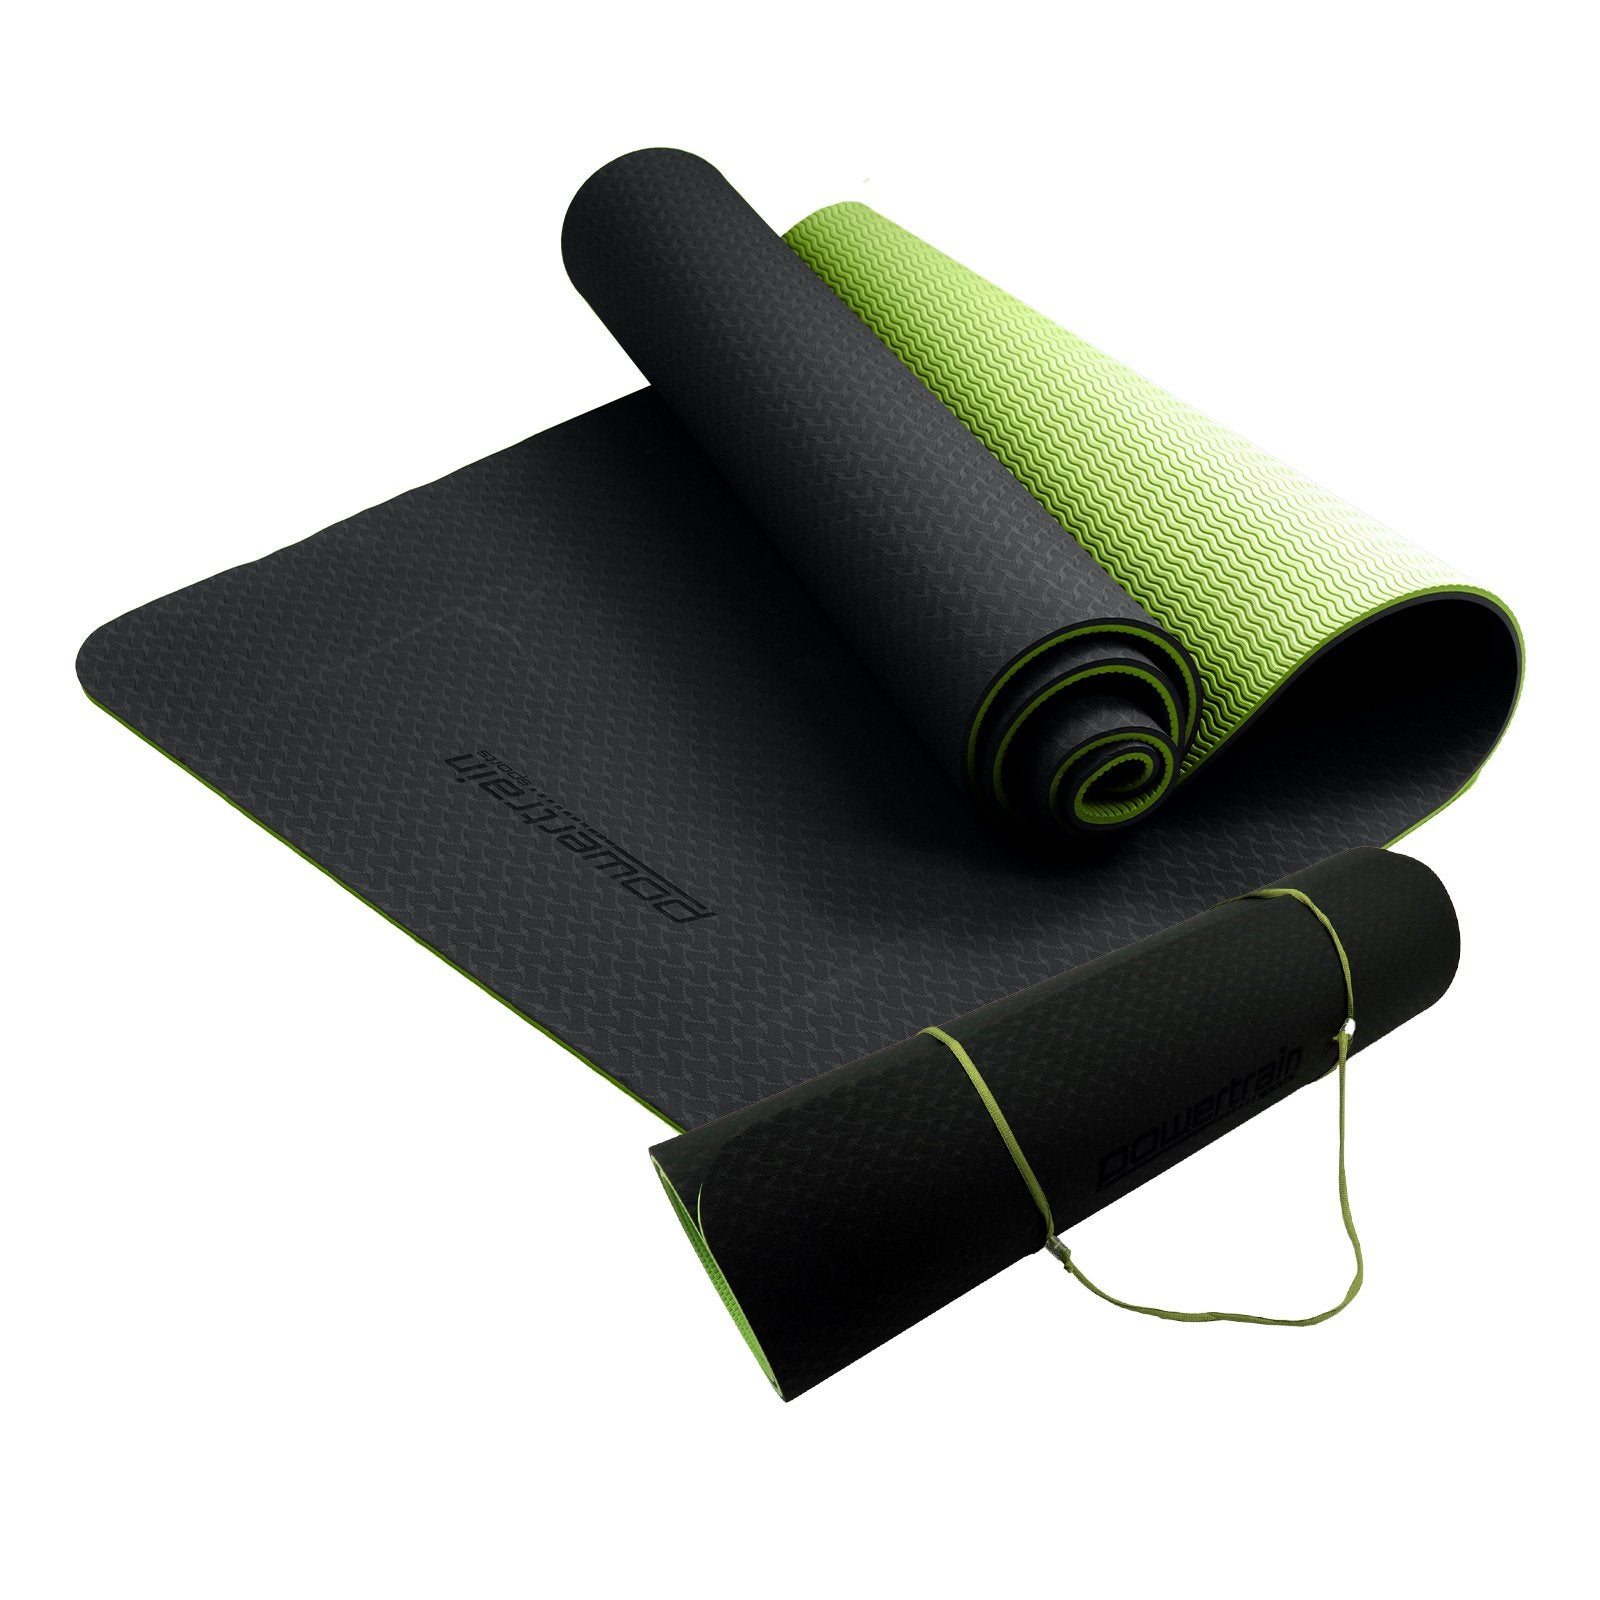 premium 6mm Eco TPE yoga matt and strap - Army Green&Green Tumaz, South  Africa